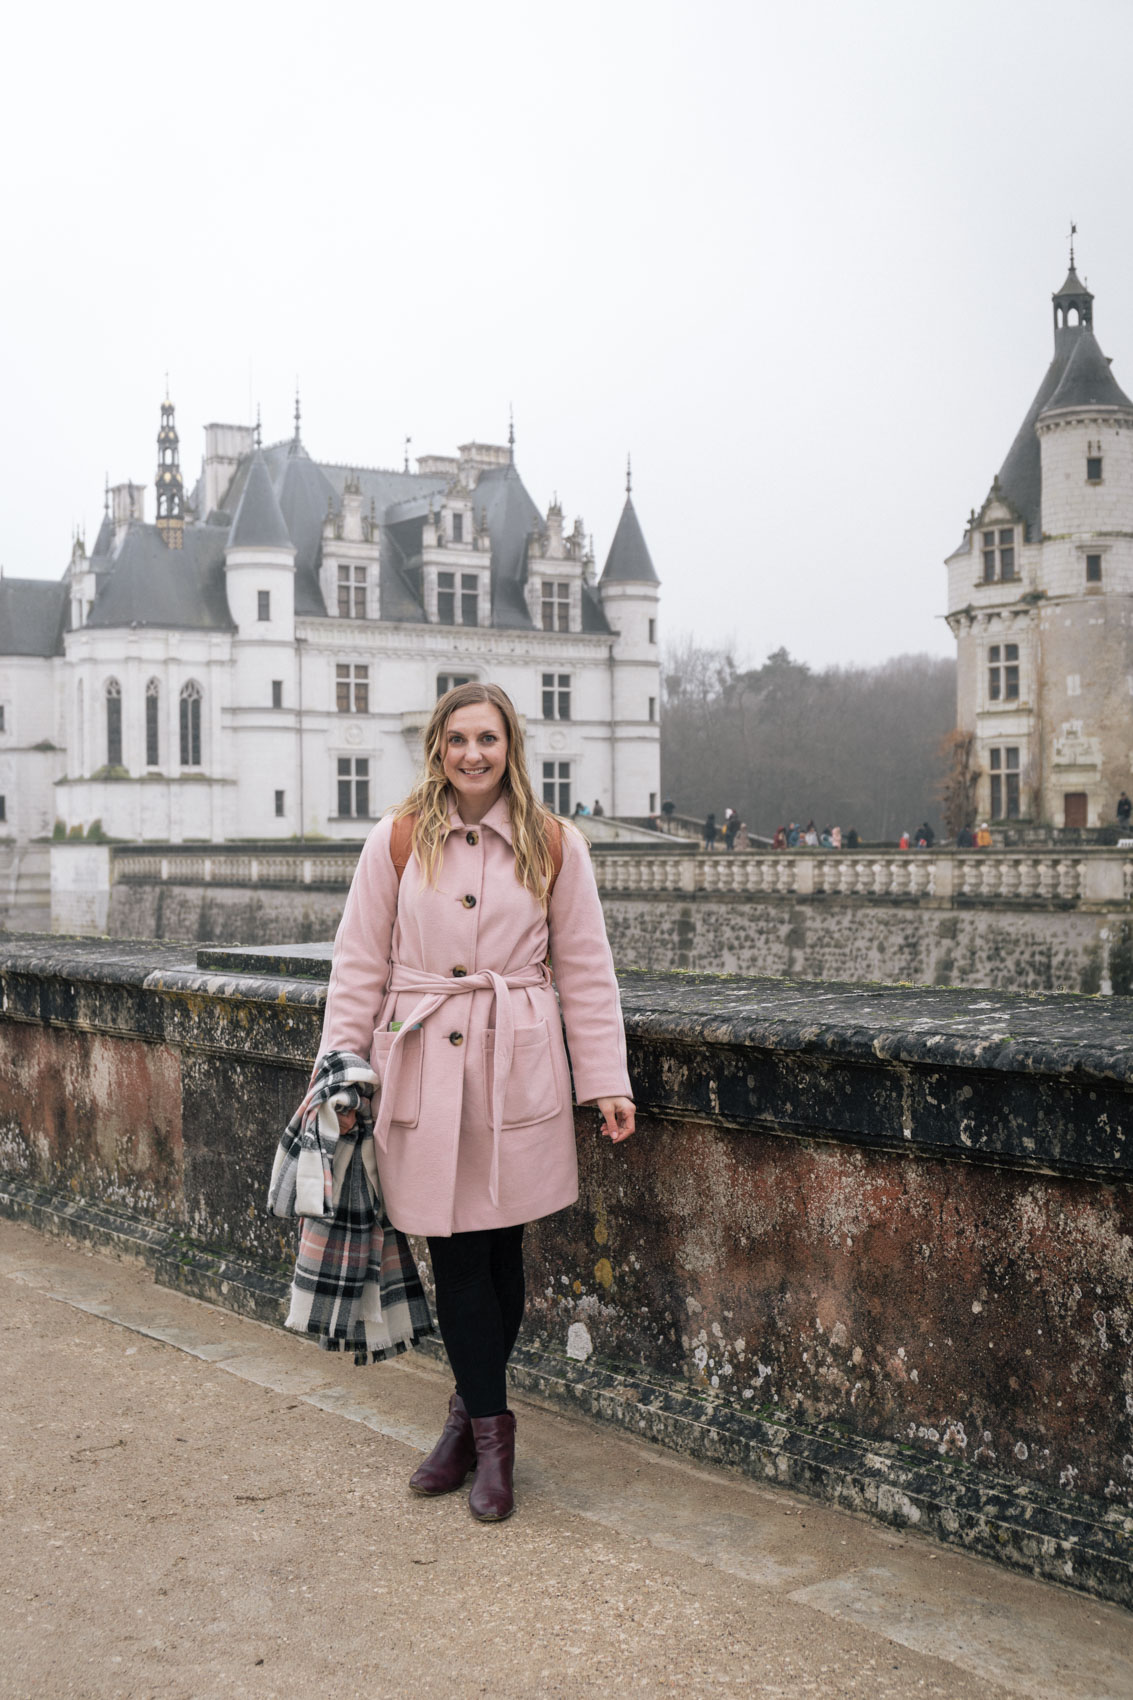 Blush pink coat outfit at a castle in France, Château de Chenonceau. 